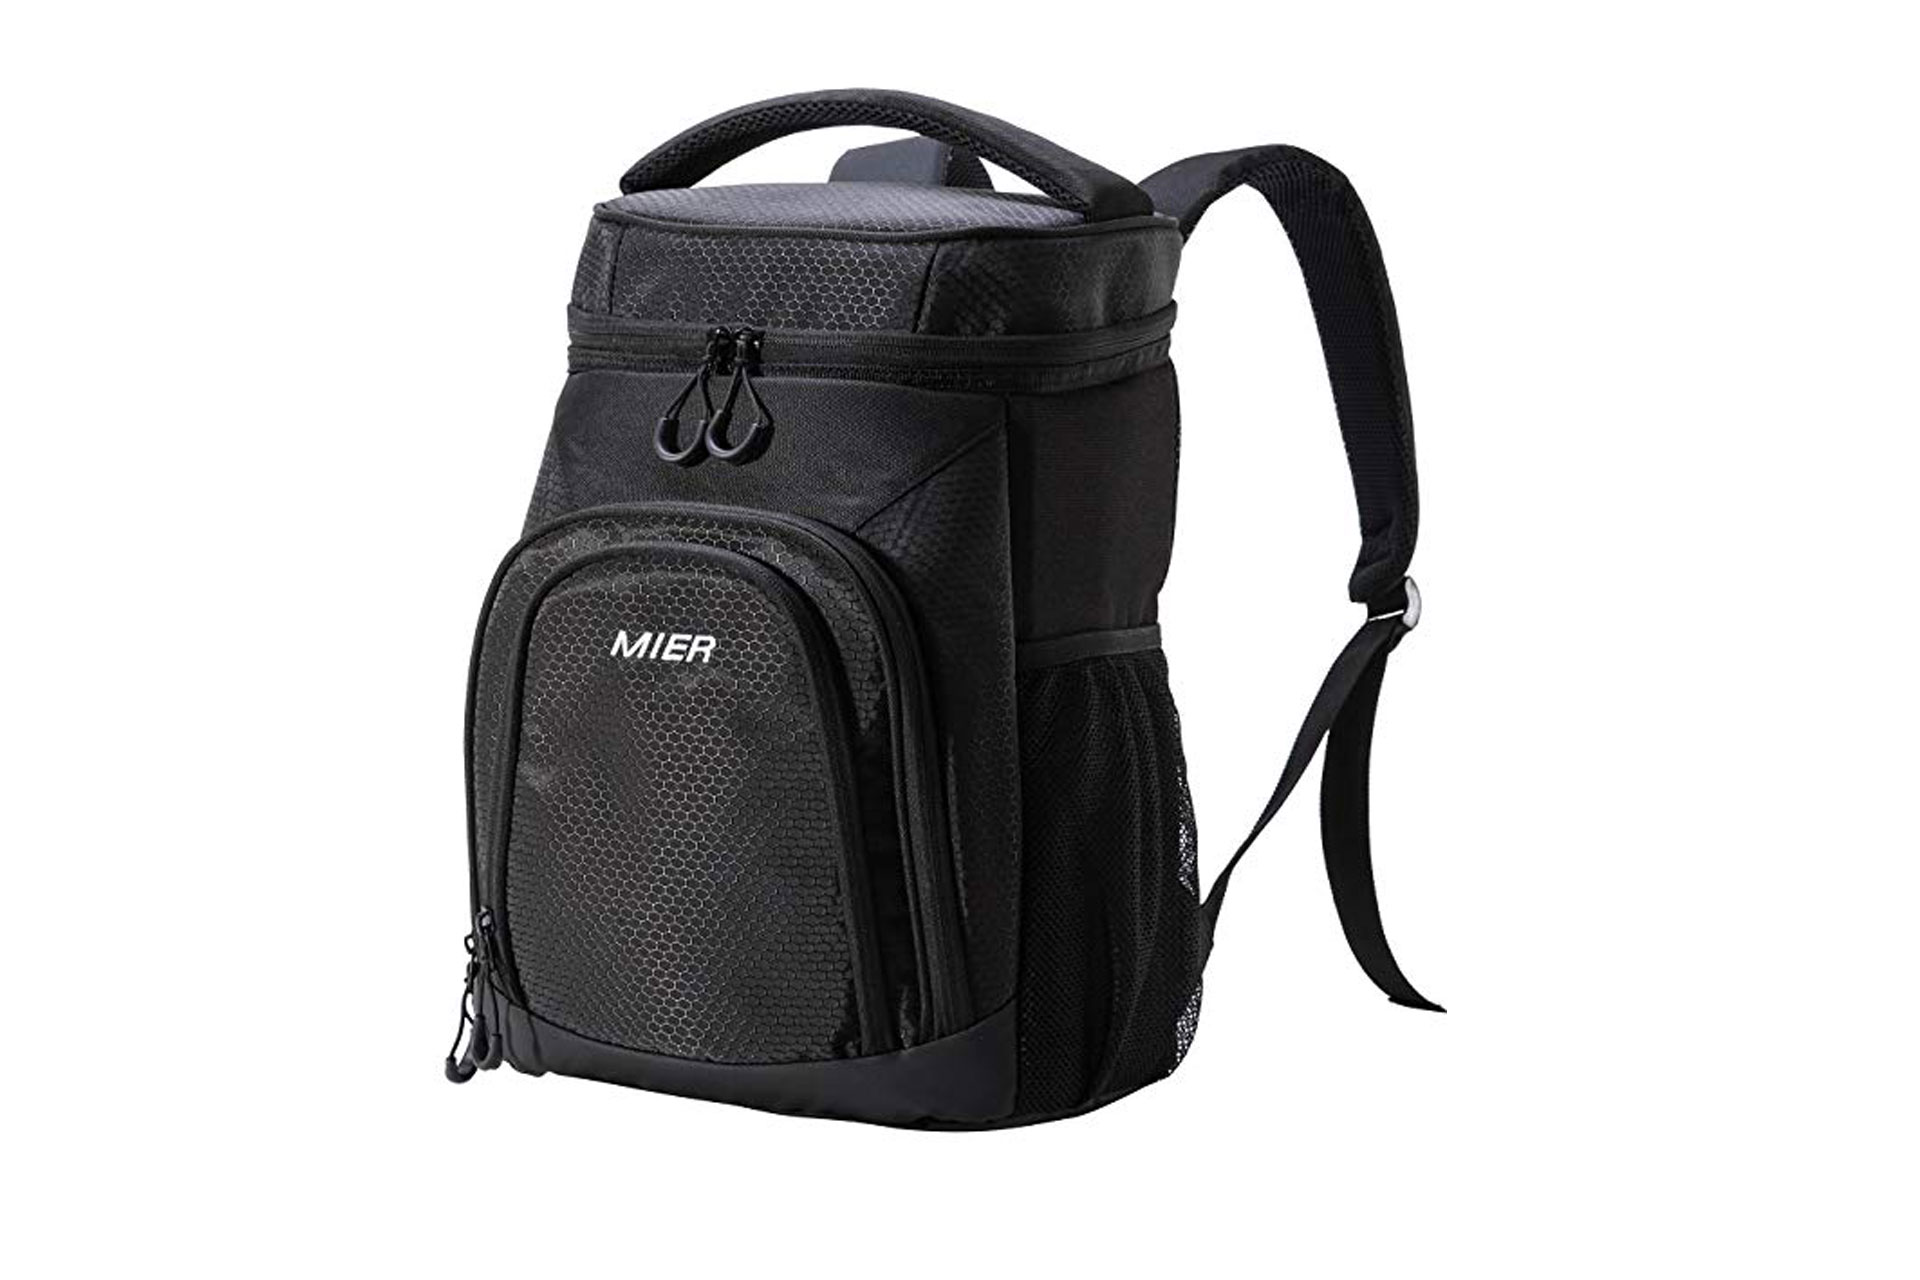 Cooler Bag; Courtesy of Amazon